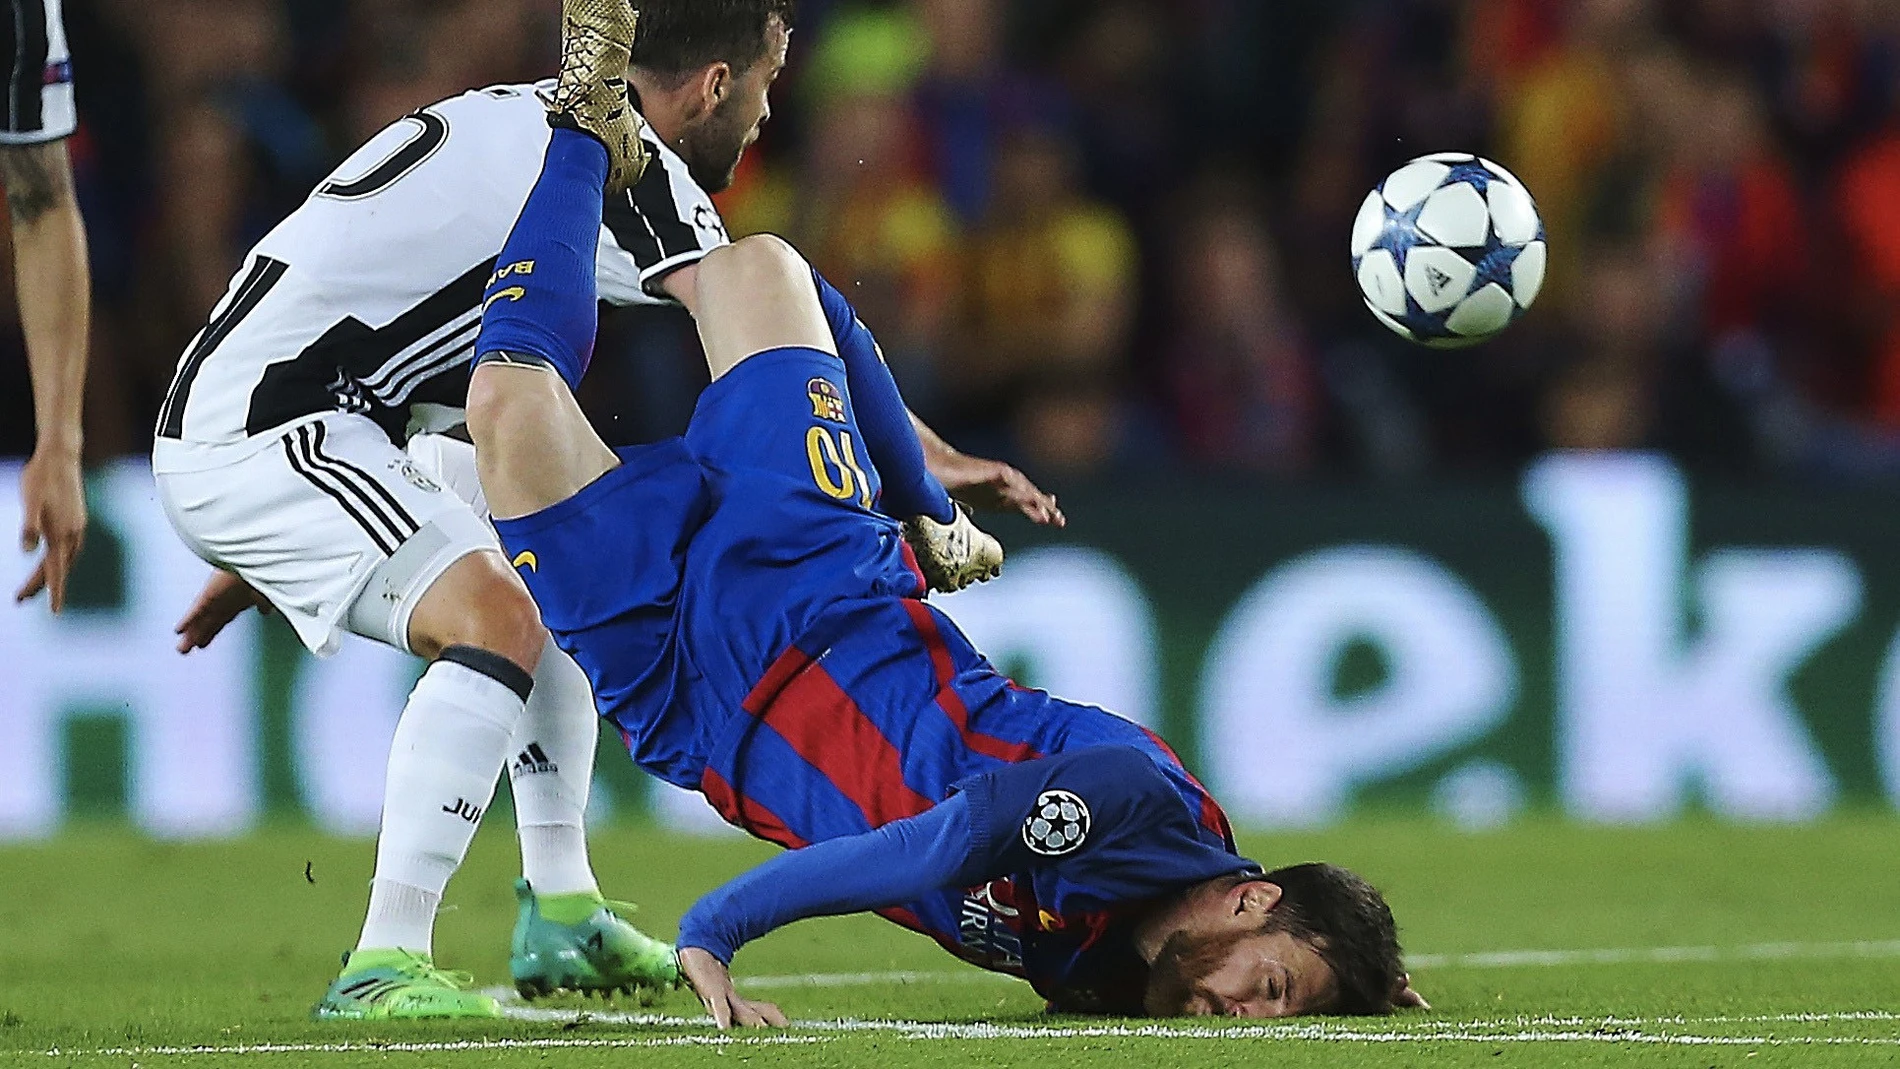 La impactante caída de Leo Messi